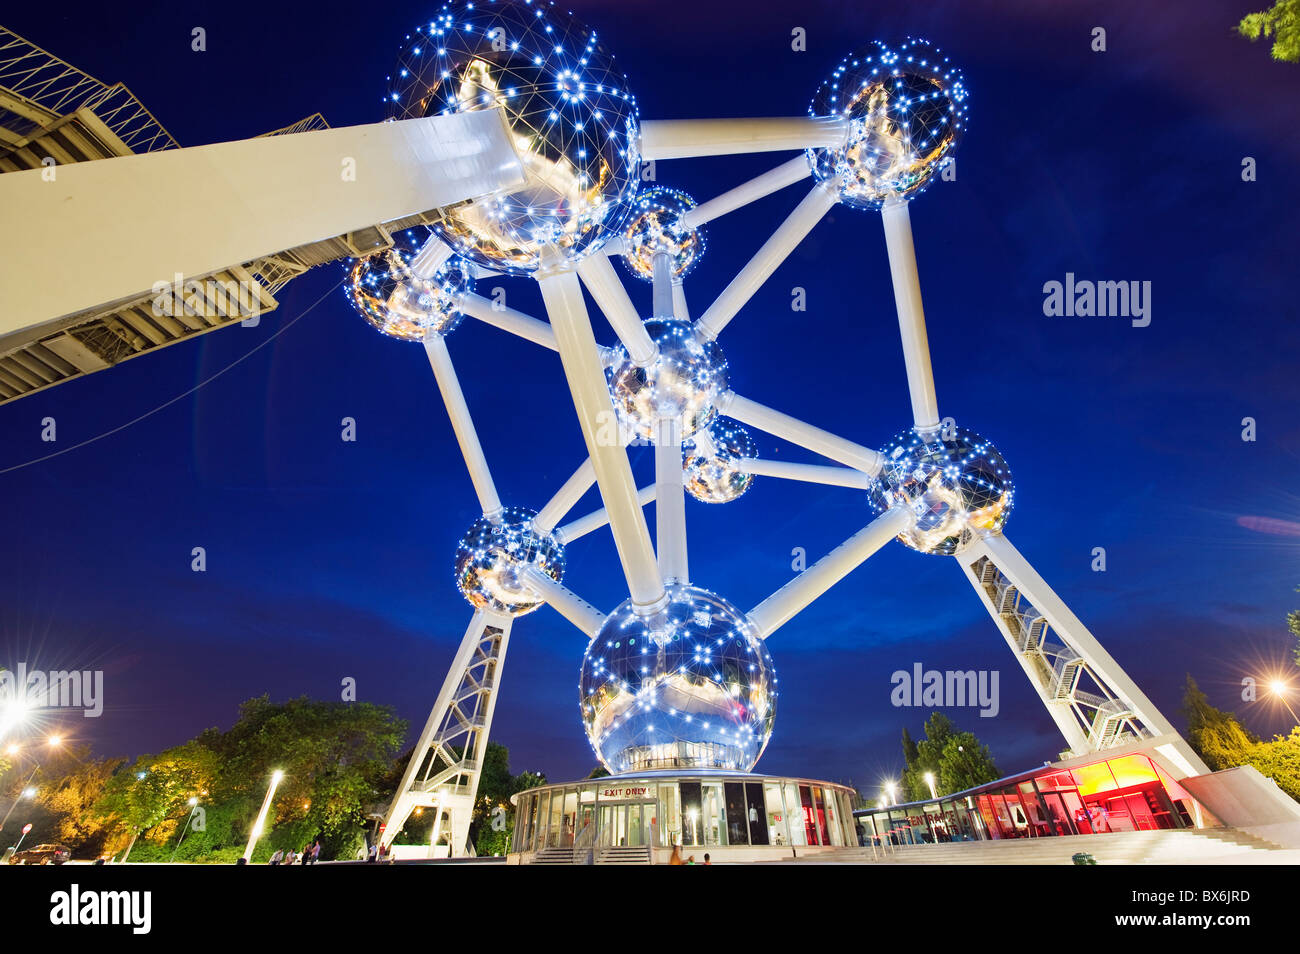 1958 World Fair, Atomium model of an iron molecule, illuminated at night, Brussels, Belgium, Europe Stock Photo